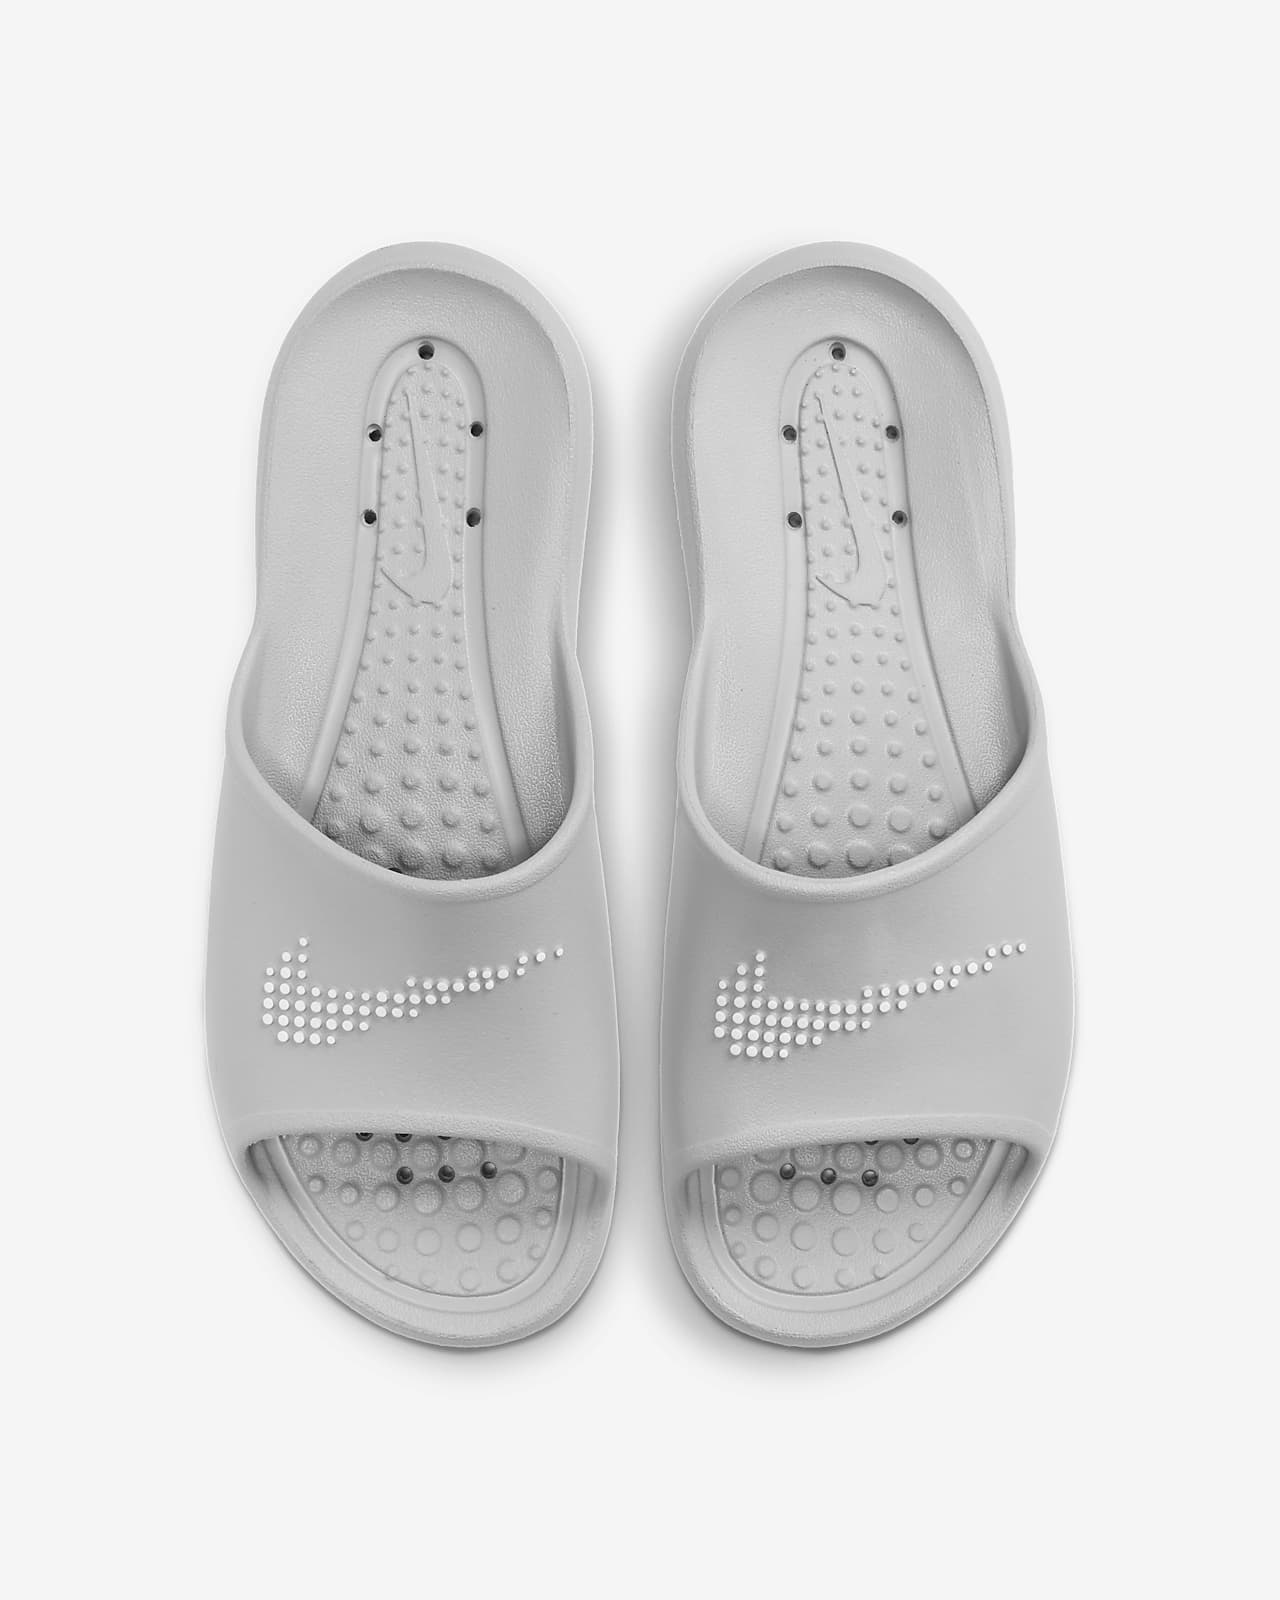 Nike Victori One Men's Shower Slide. Nike RO